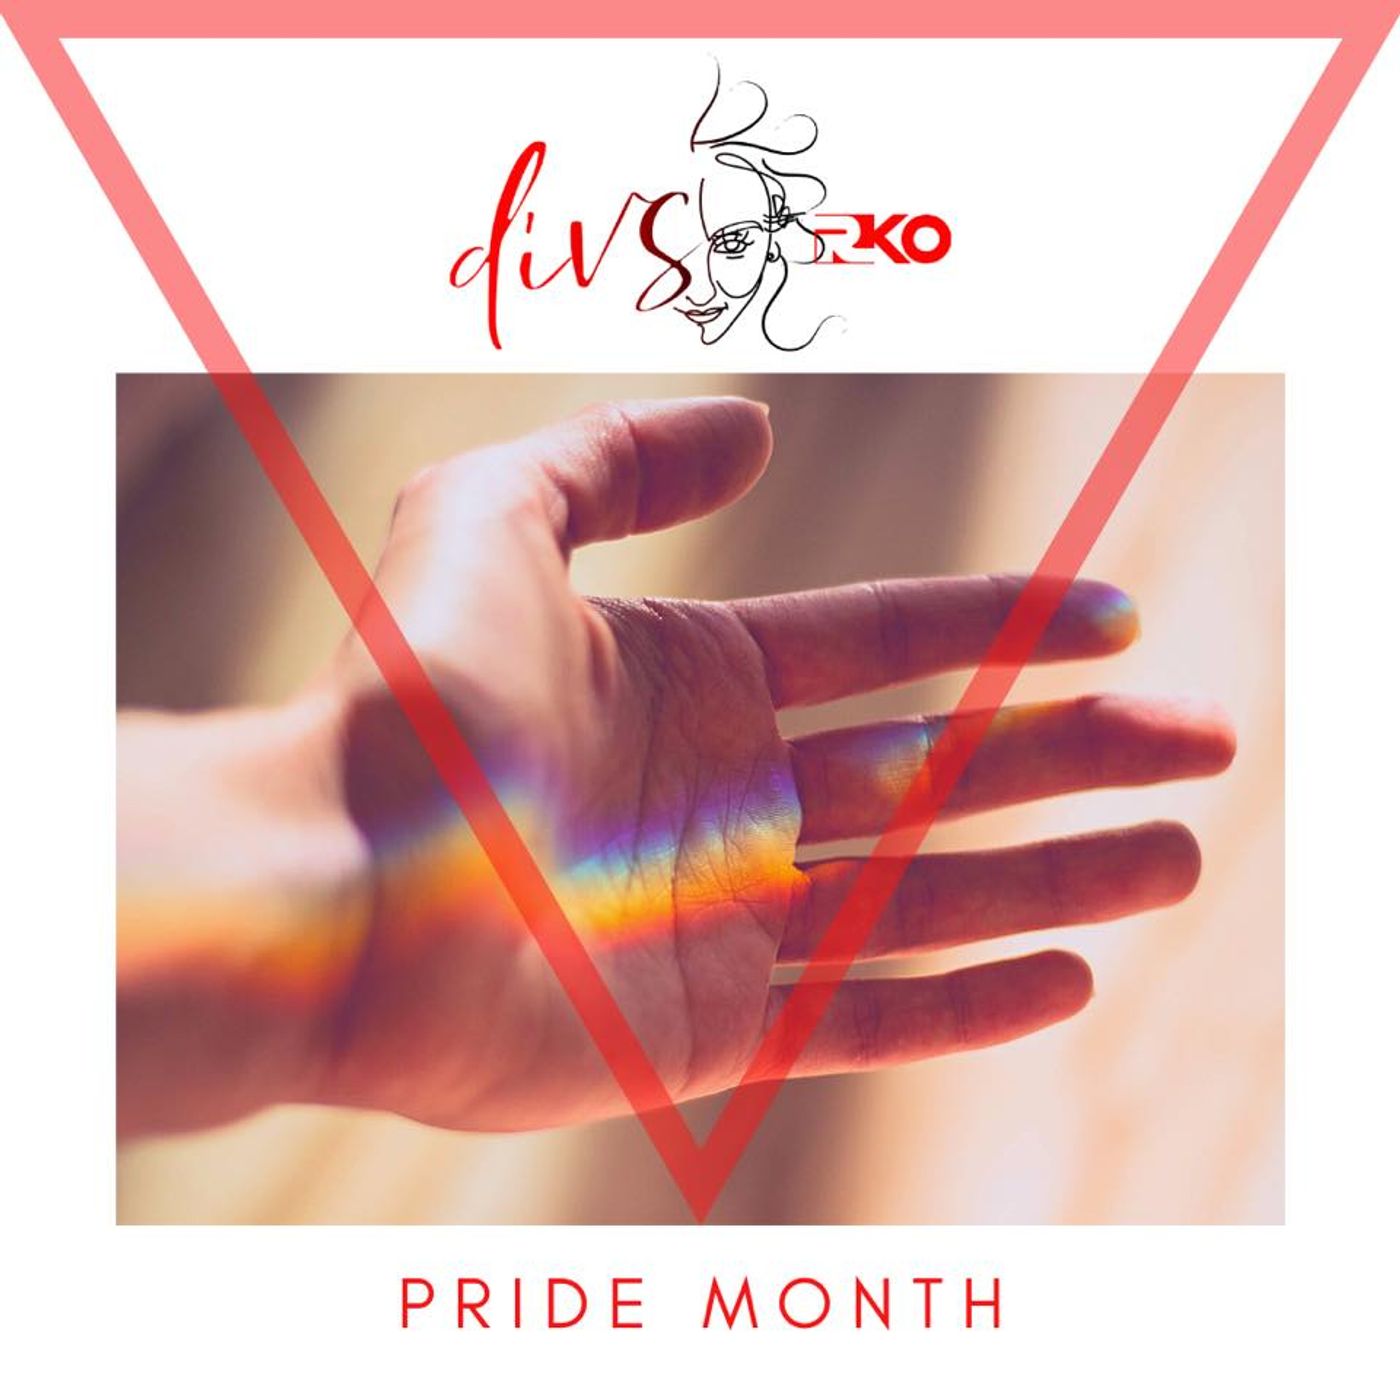 diVS - Pride Month - 15/06/2020